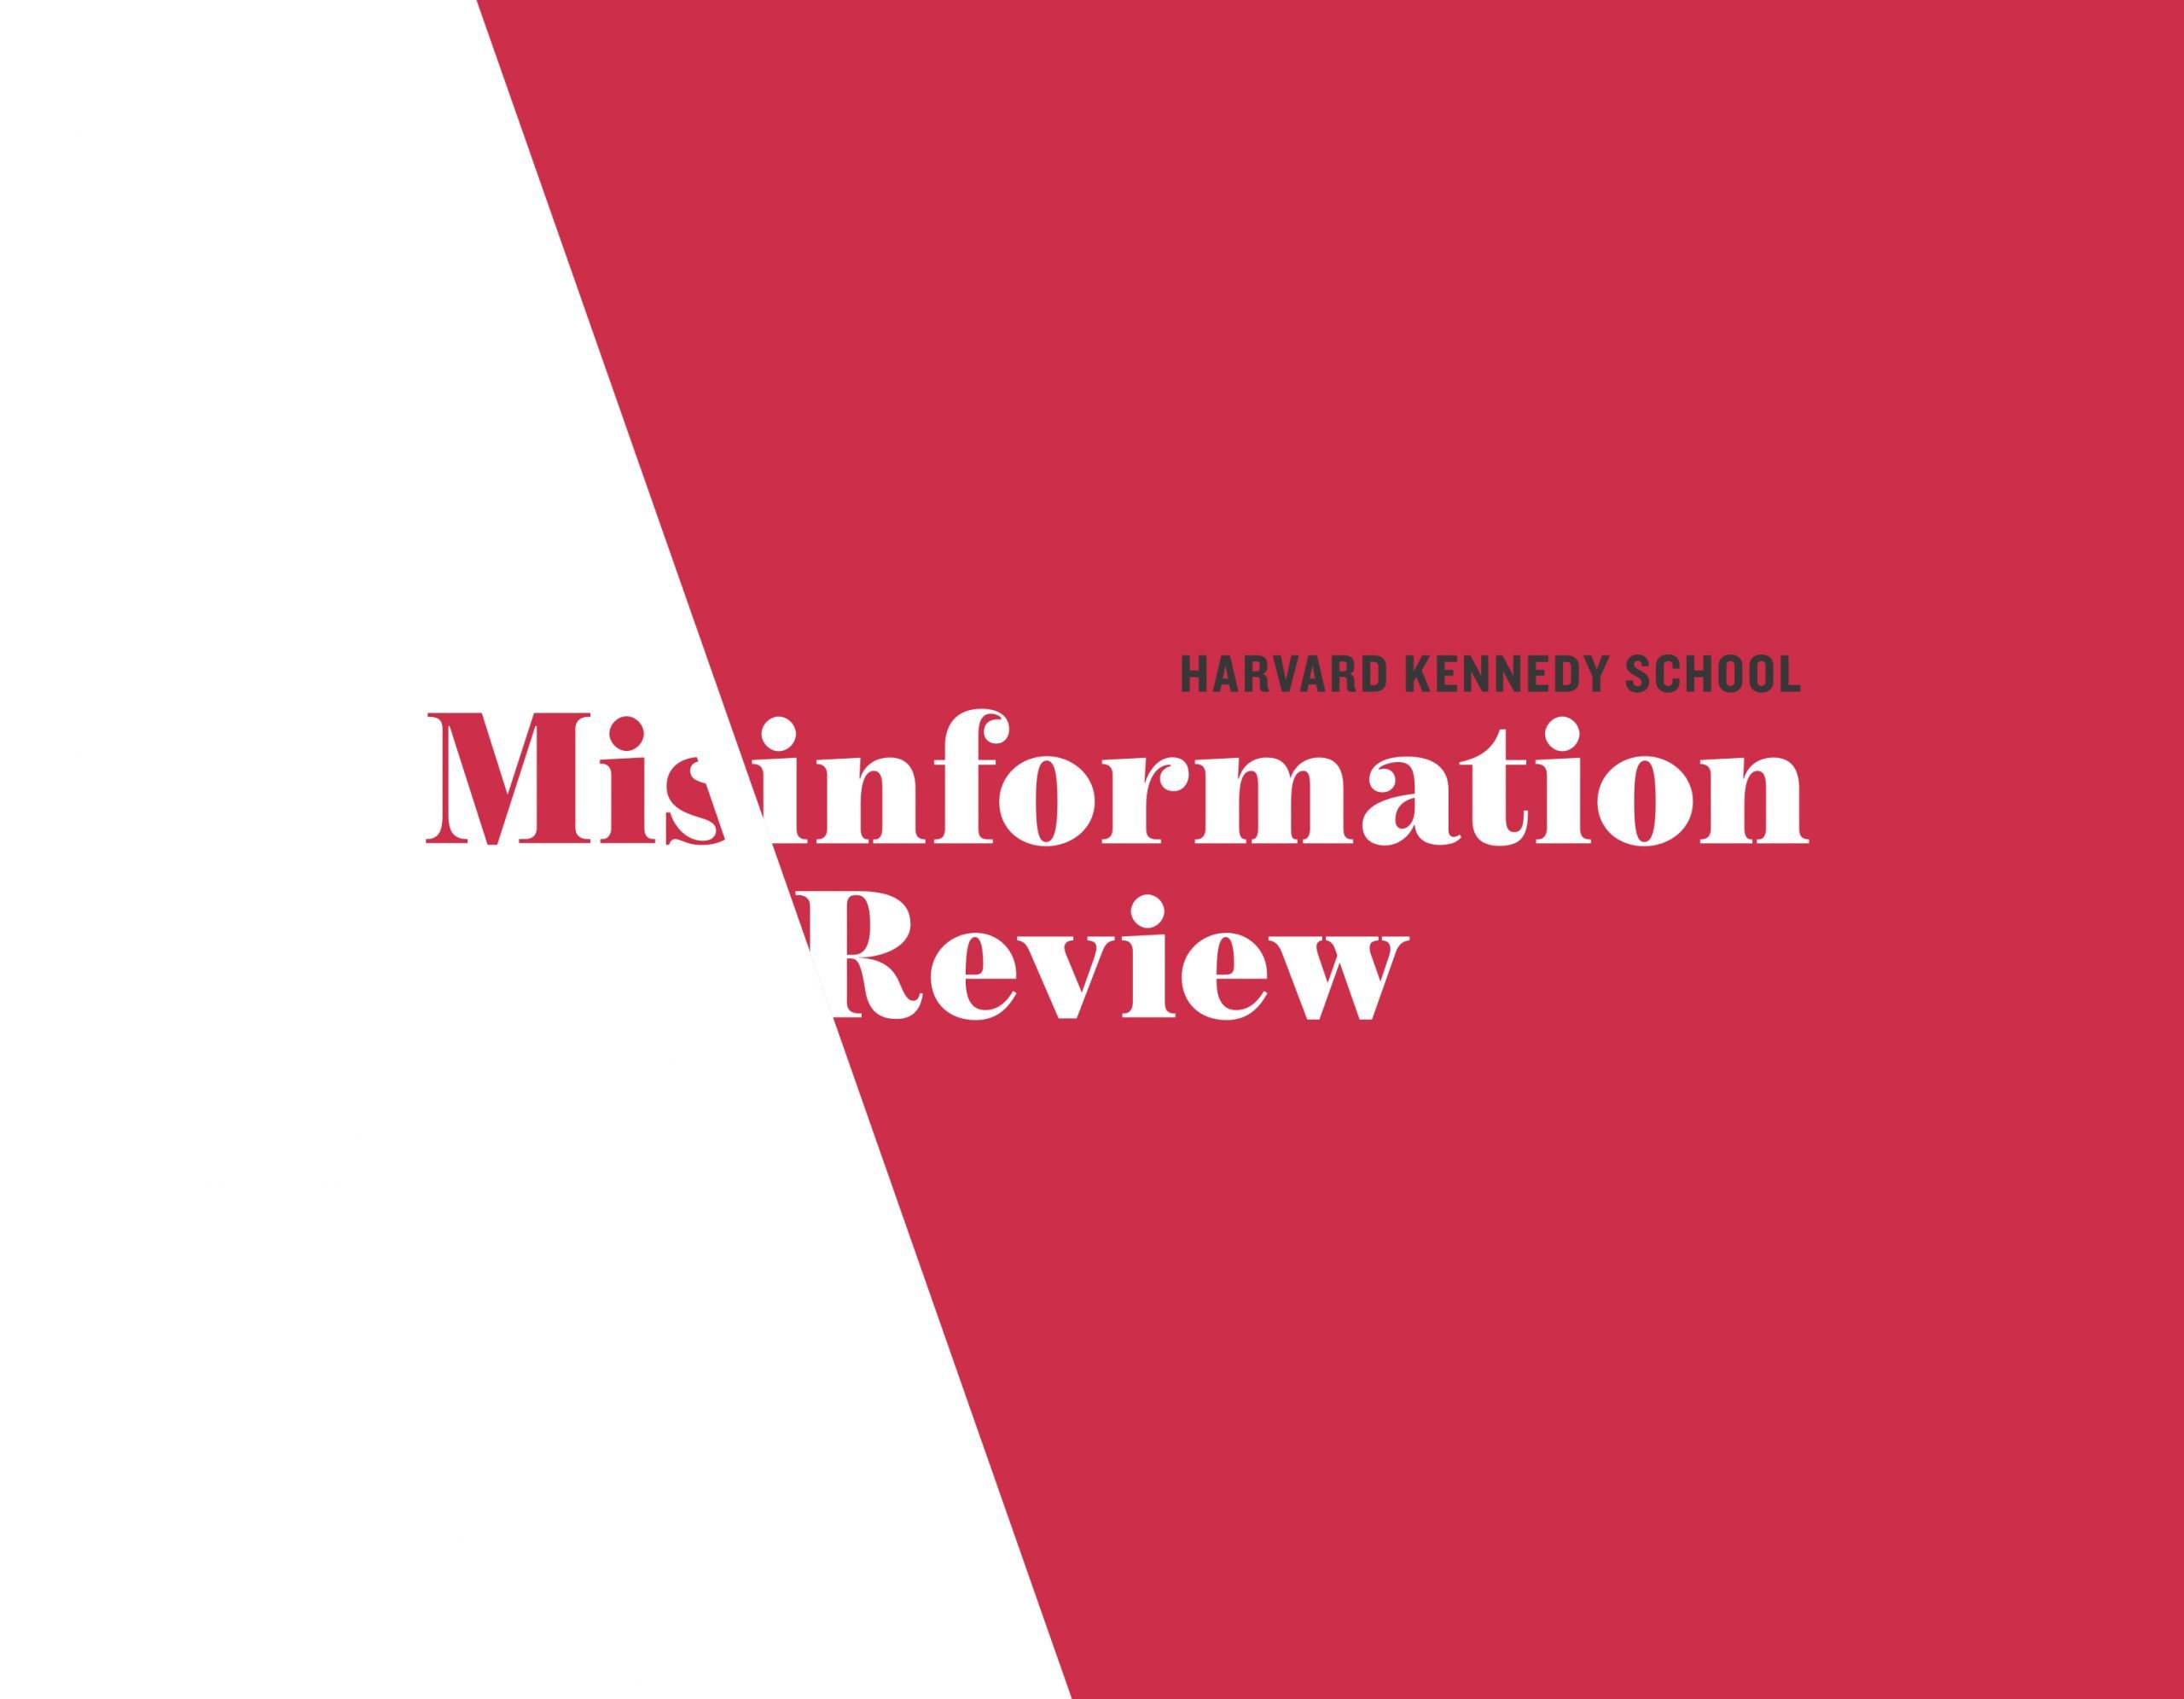 Harvard Kennedy School Misinformation Review